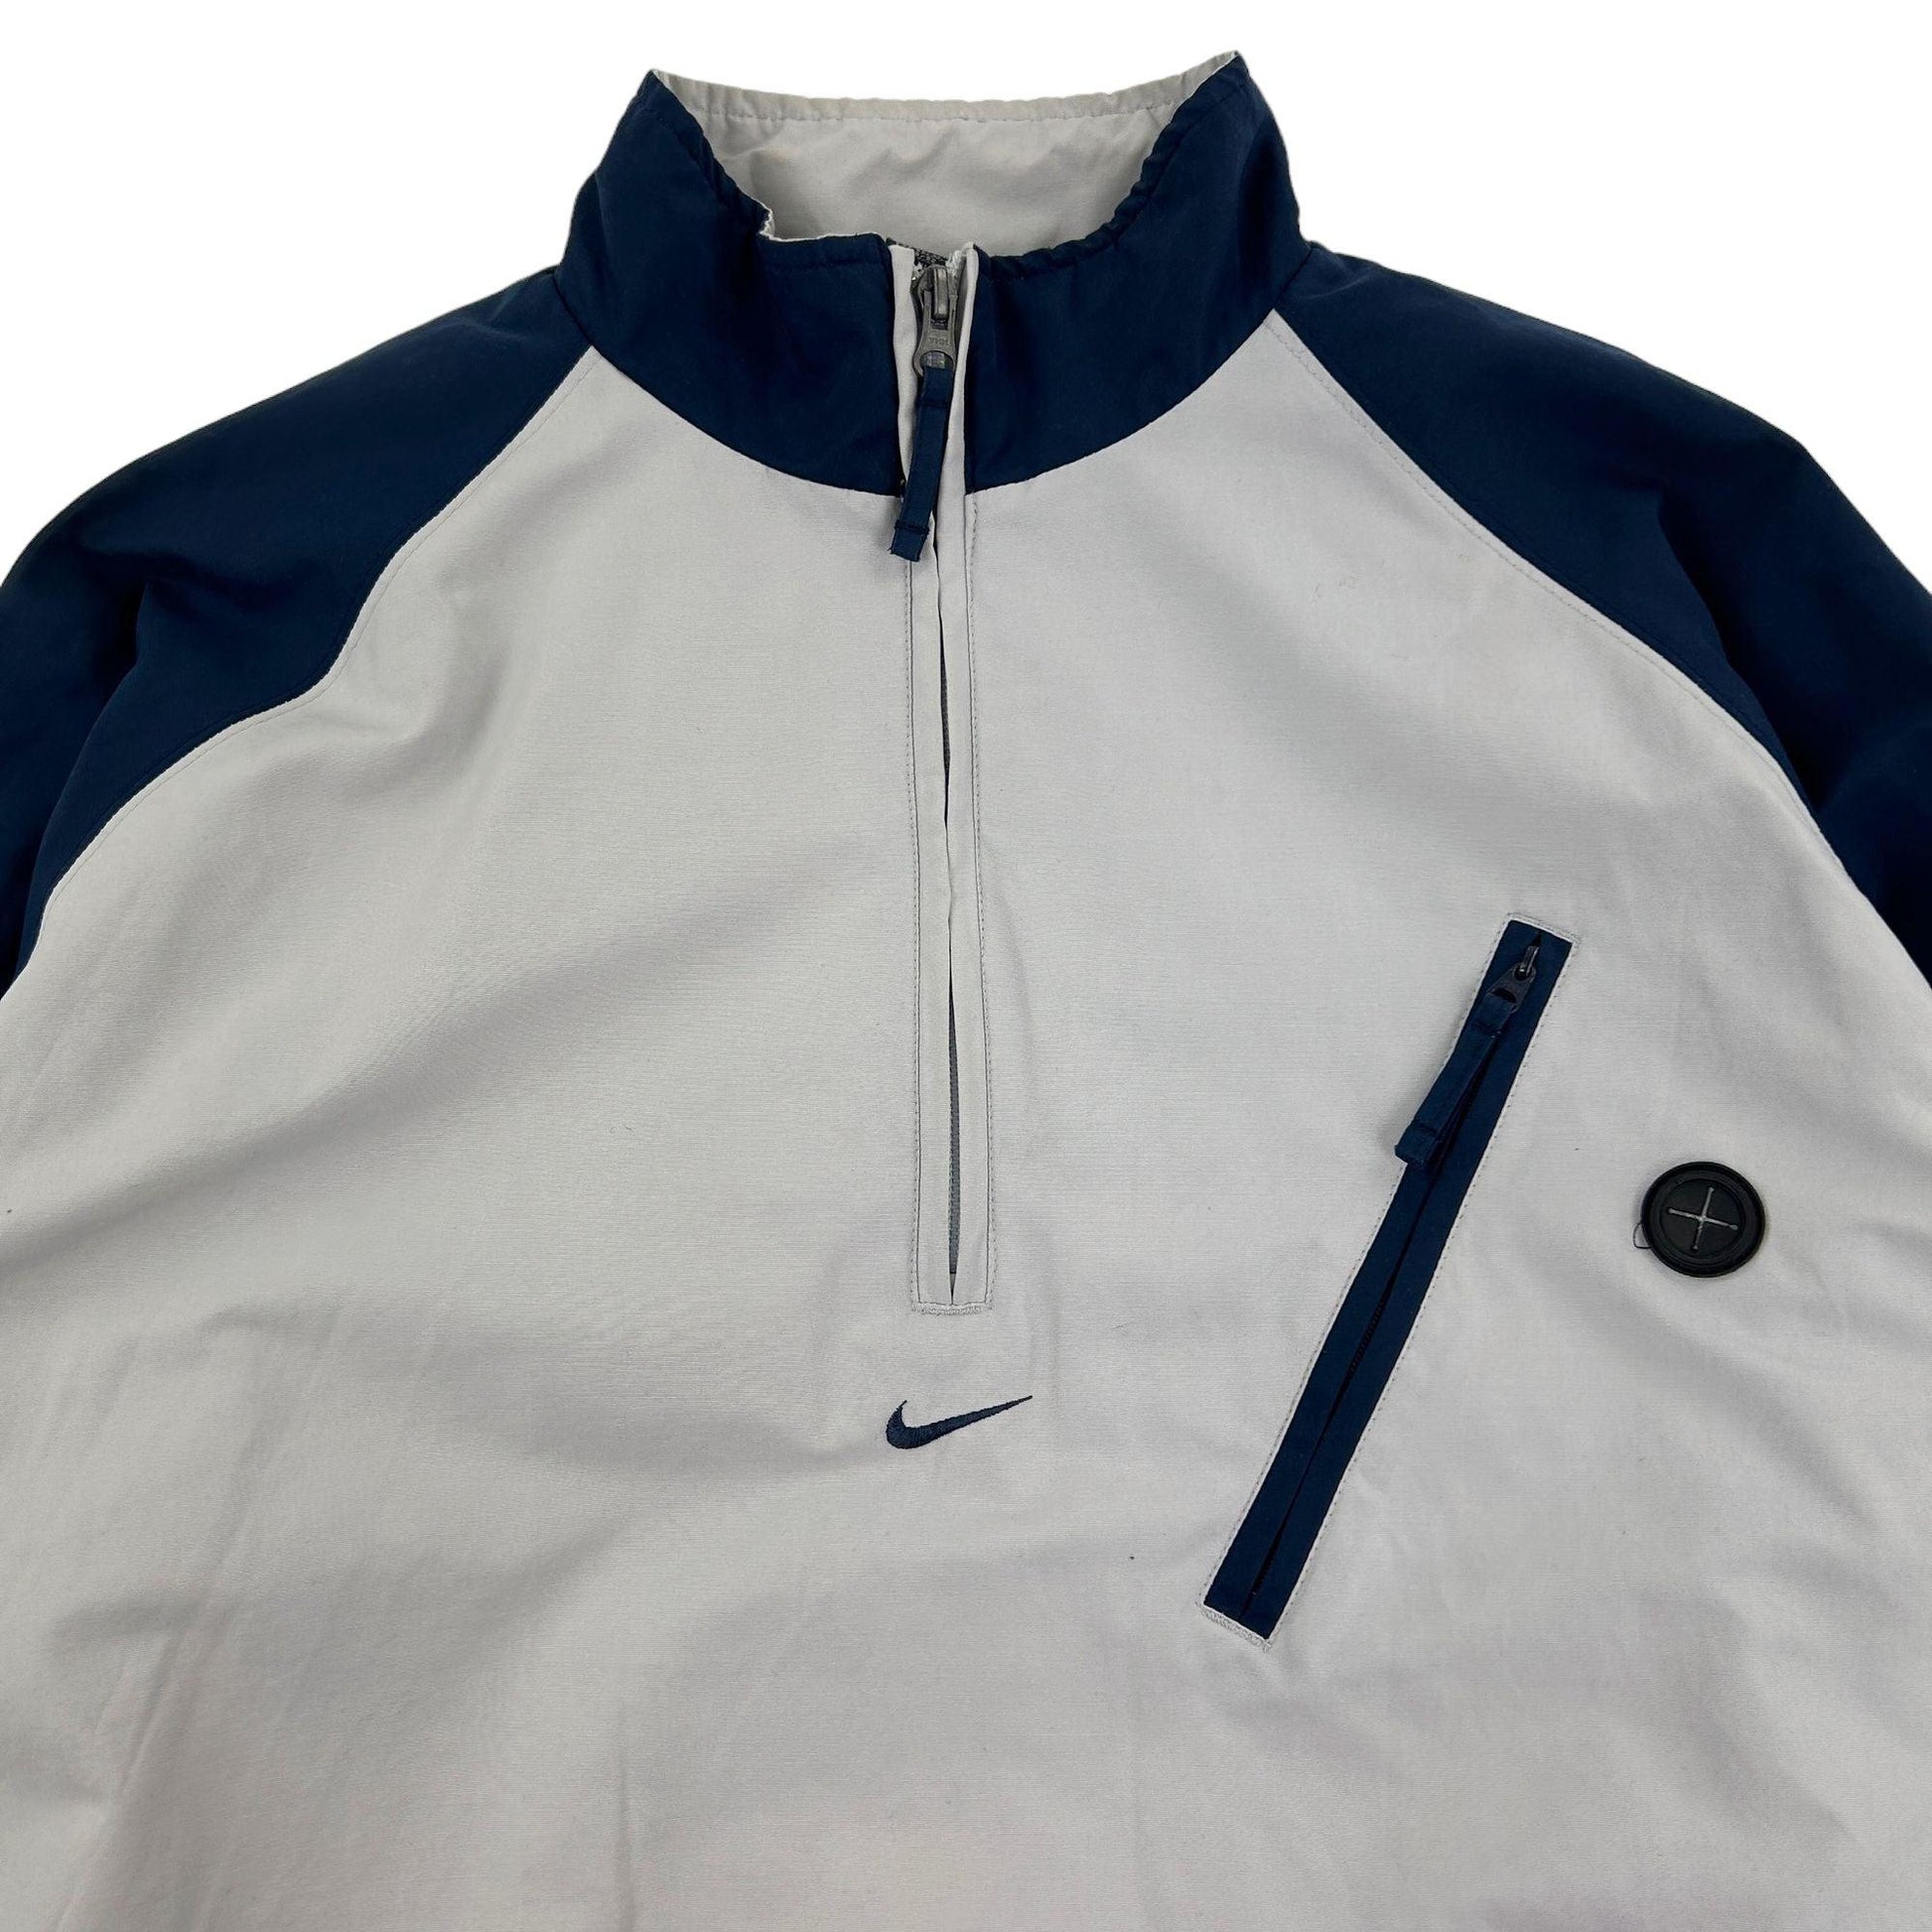 Vintage Nike Quarter Zip Jacket Size L - Known Source